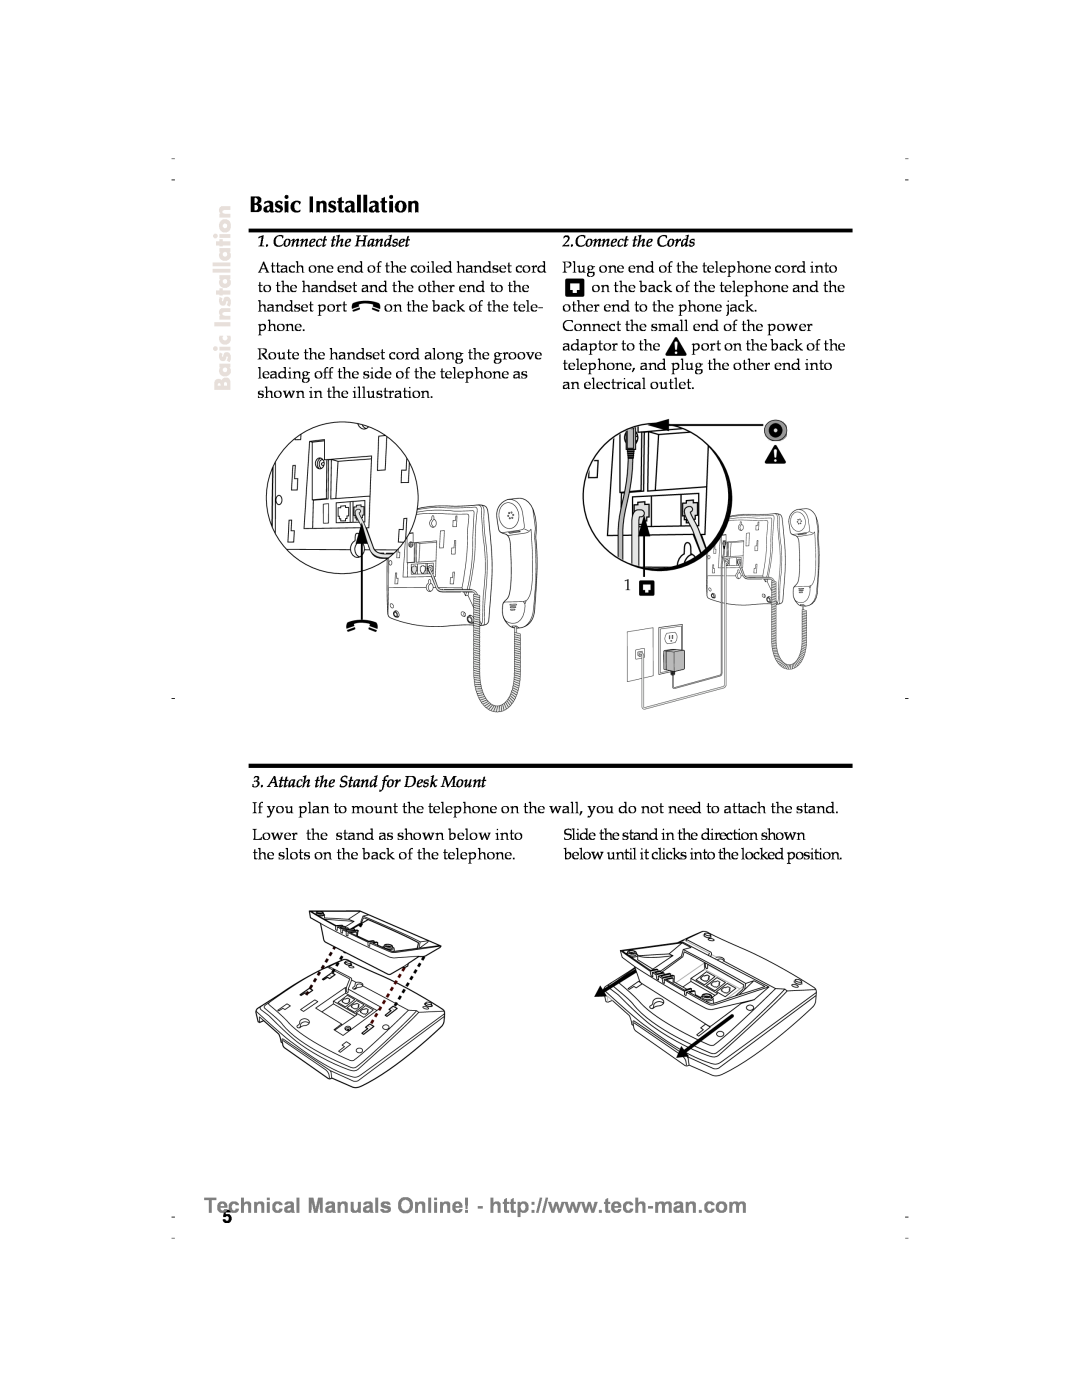 Aastra Telecom 9116 technical manual Basic Installation 